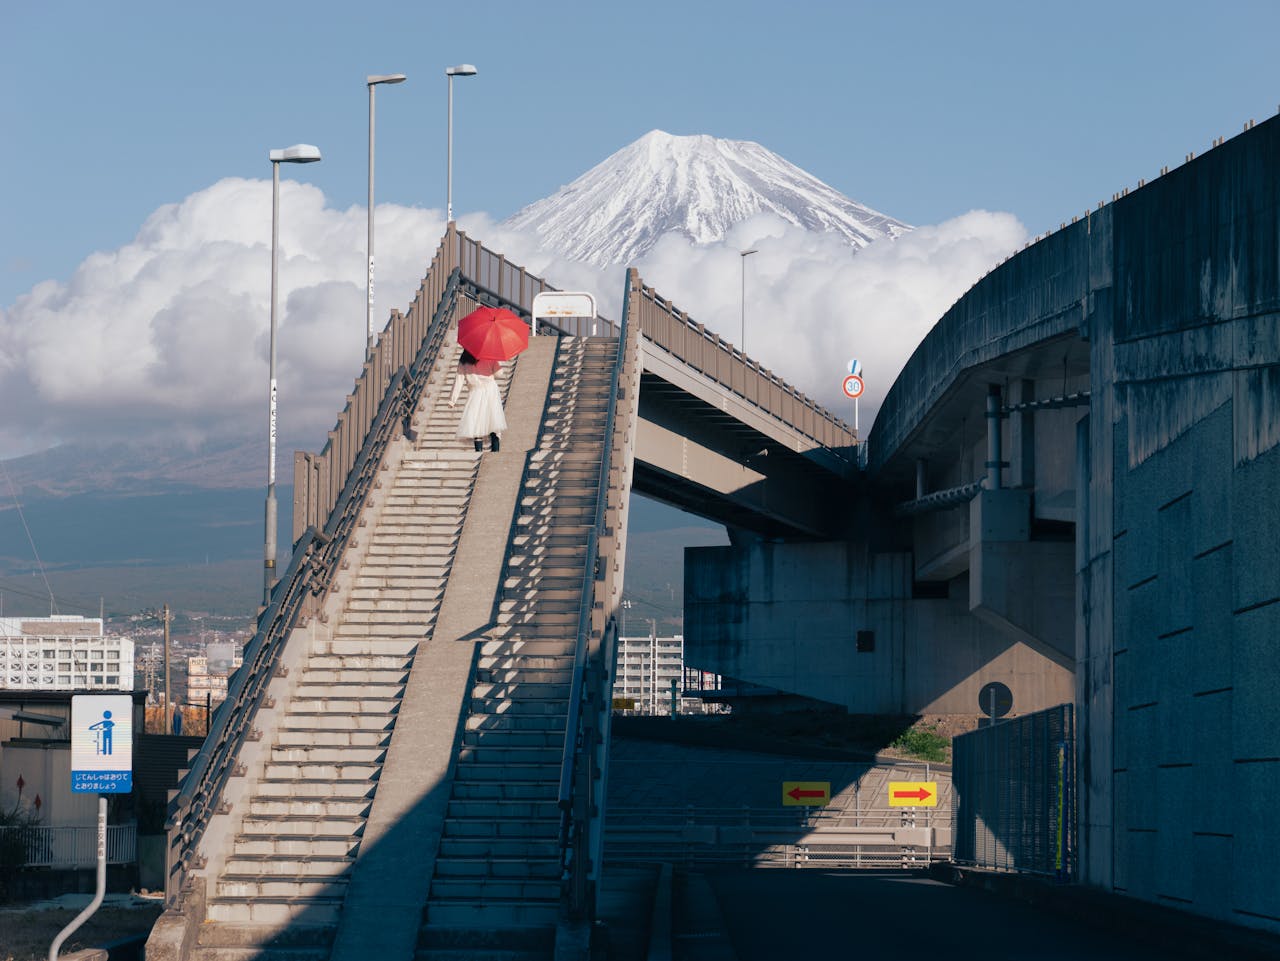 Pagar tinggi dipasang di area Mount Fuji Dream Bridge atau Jembatan Impian Gunung Fuji. (PIXABAY/TIEN NGUYEN)